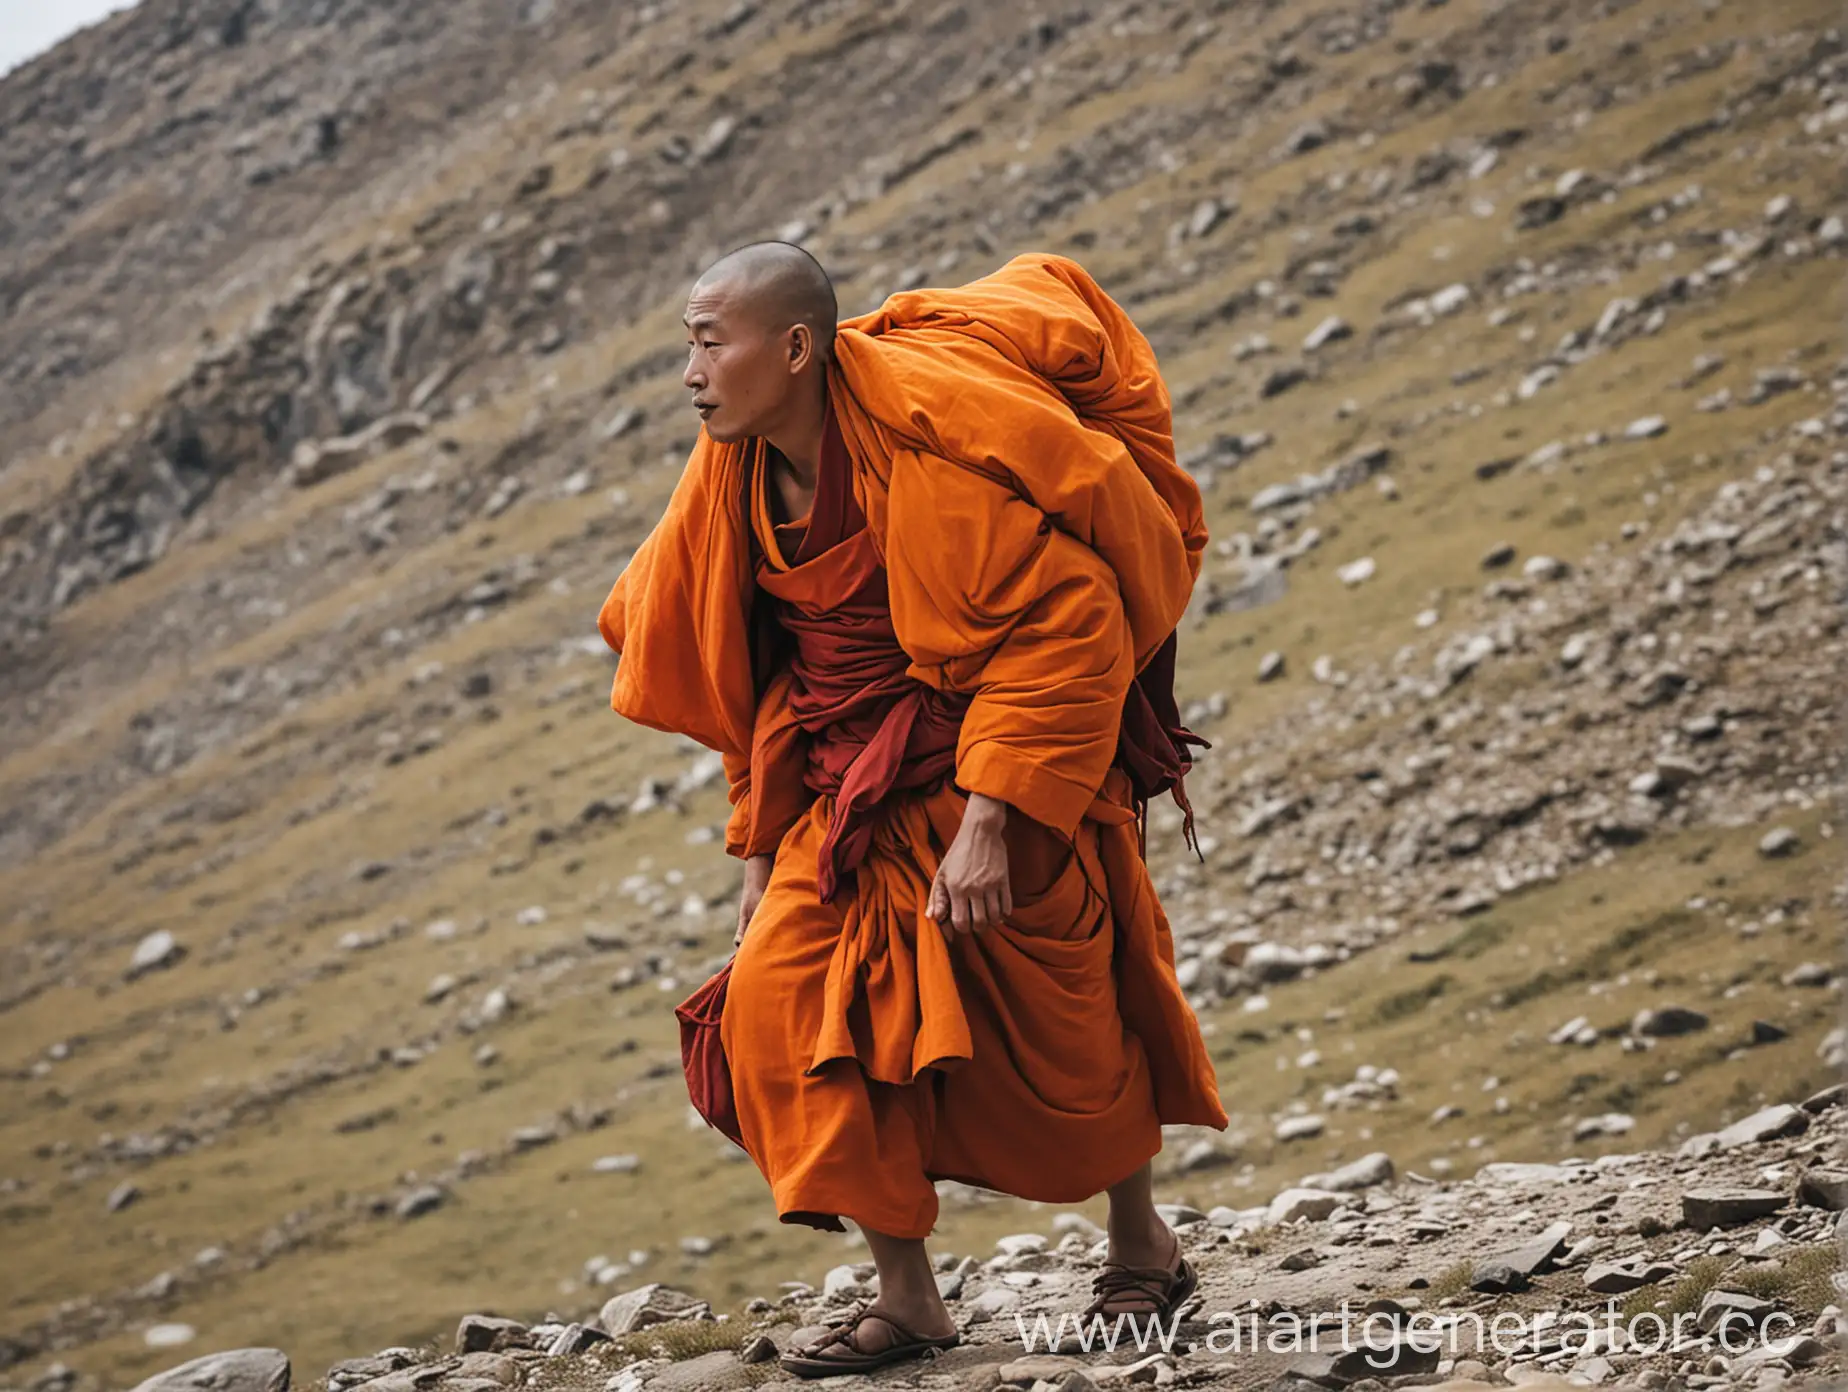 Tibetan-Monk-Carrying-Person-in-Mountainous-Terrain